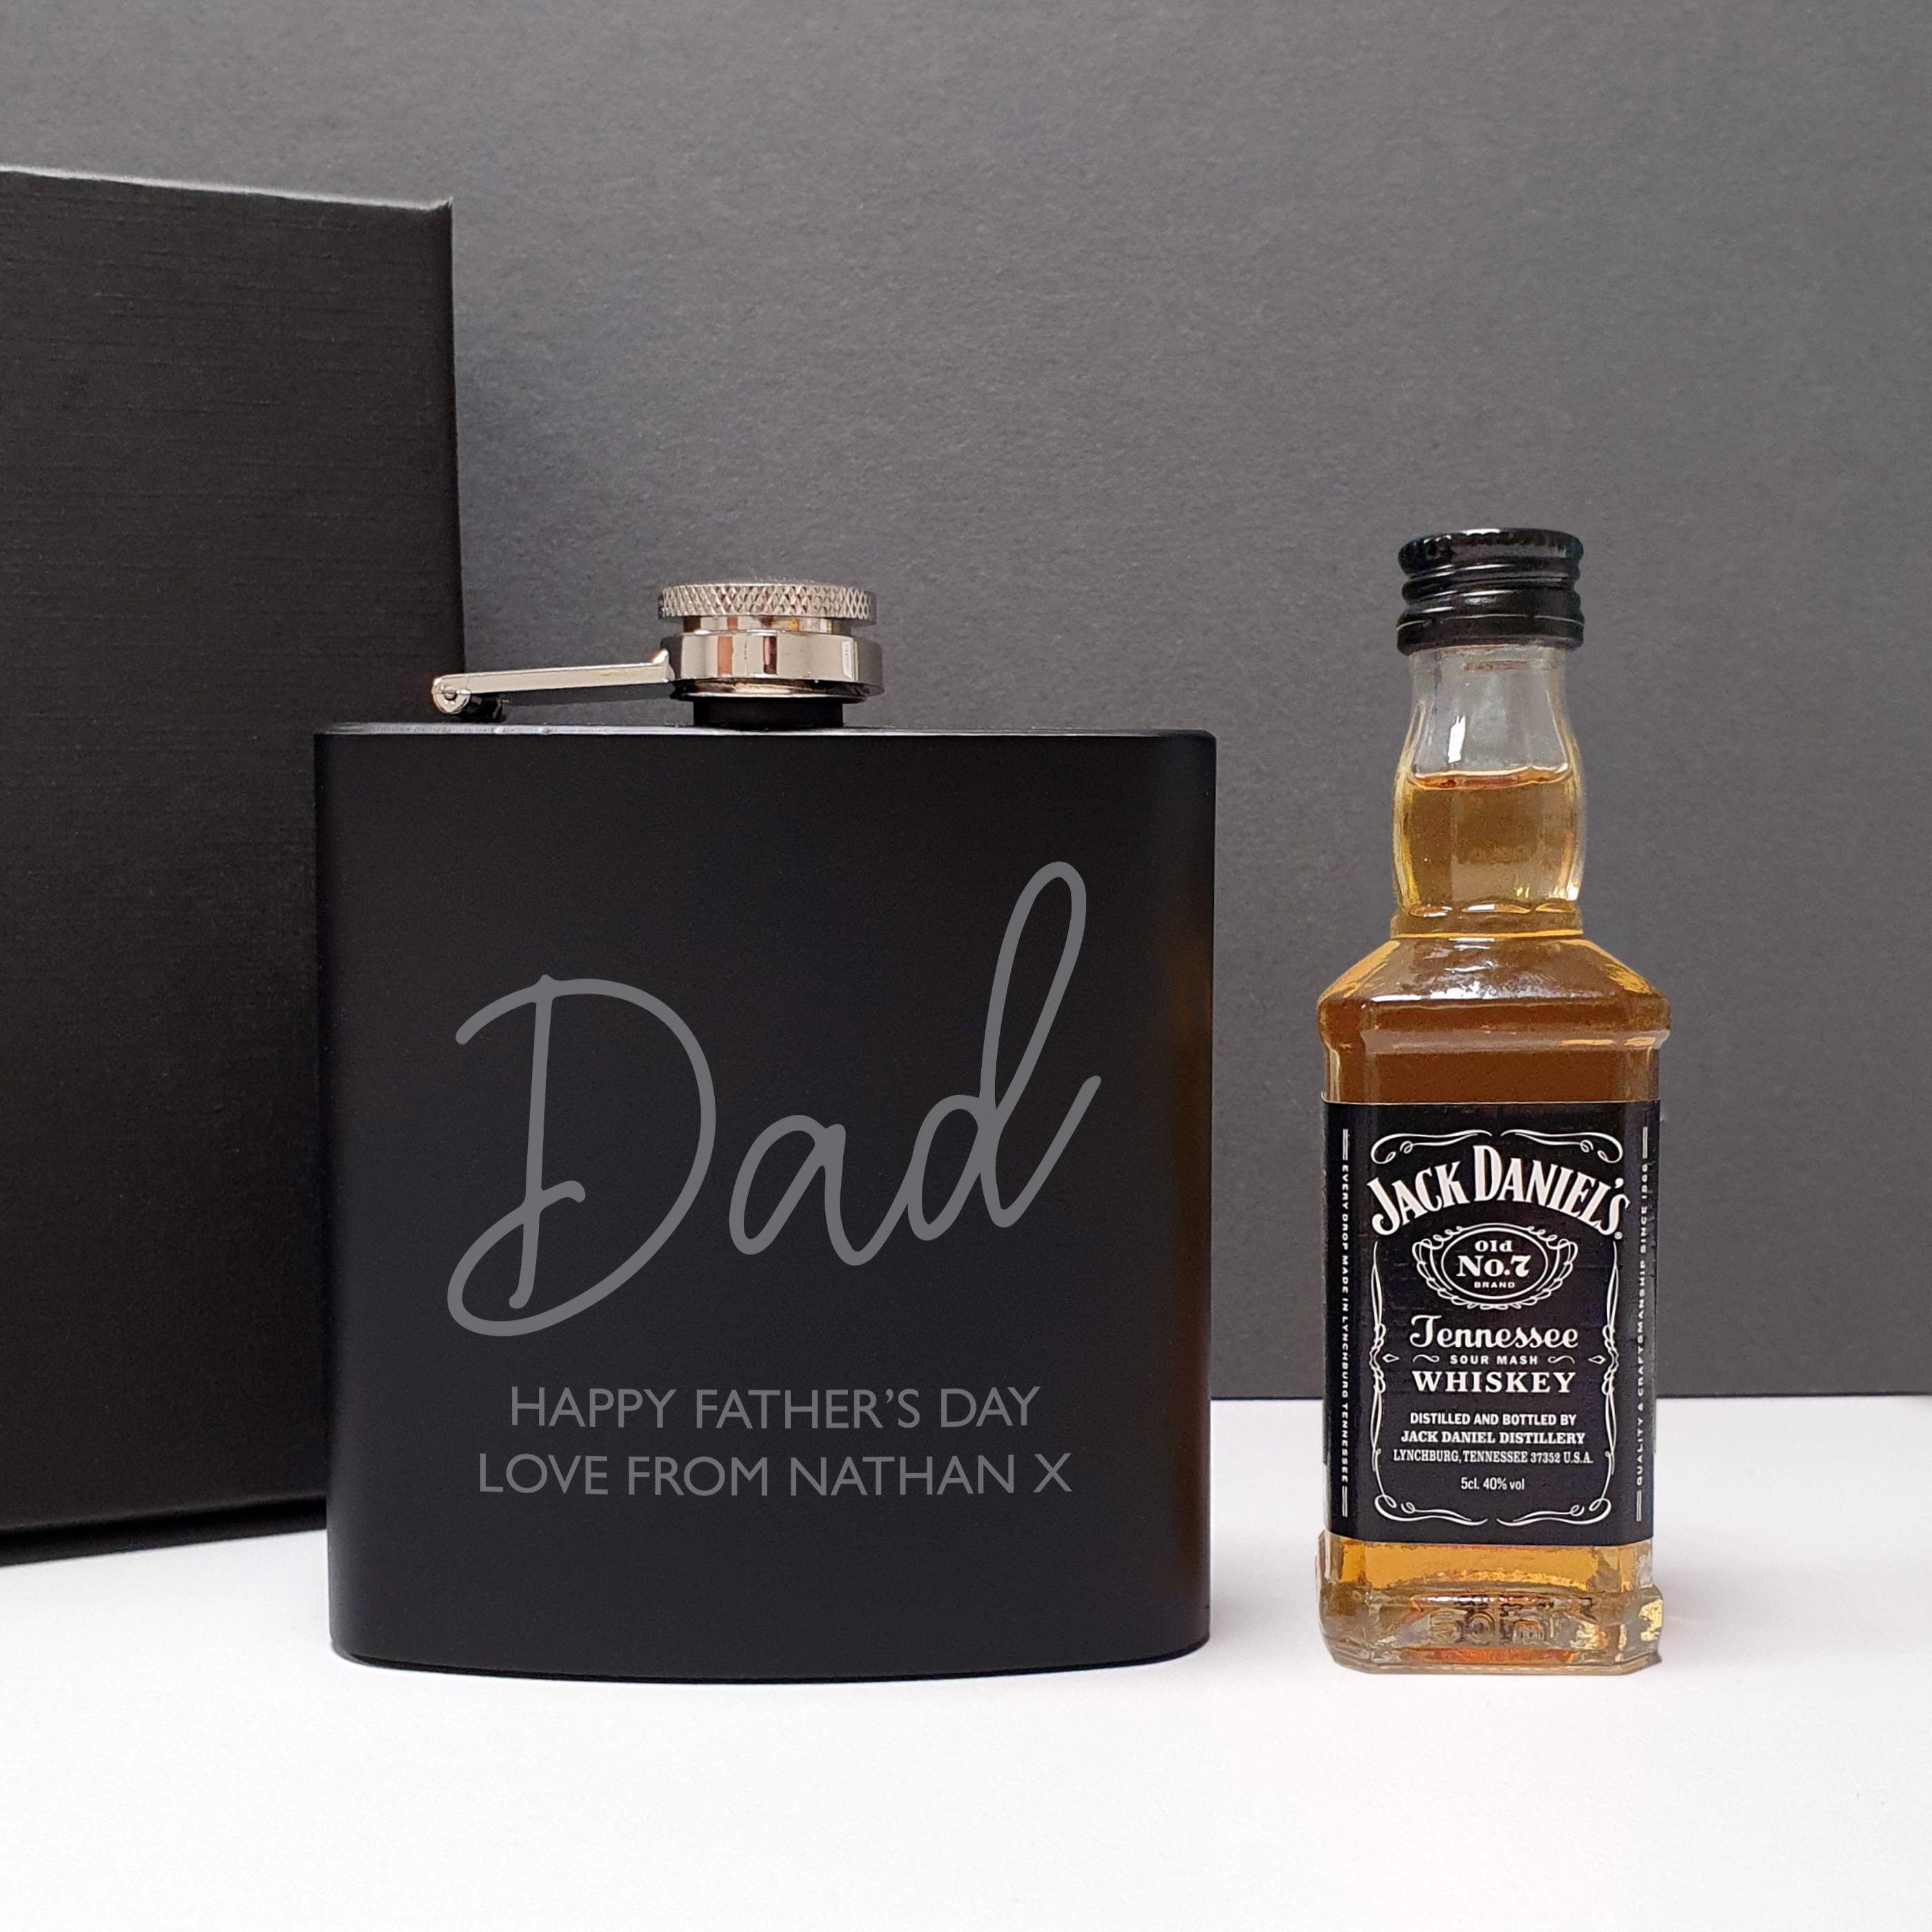 Personalised Hip Flask & Jack Daniels Whiskey Gift Set